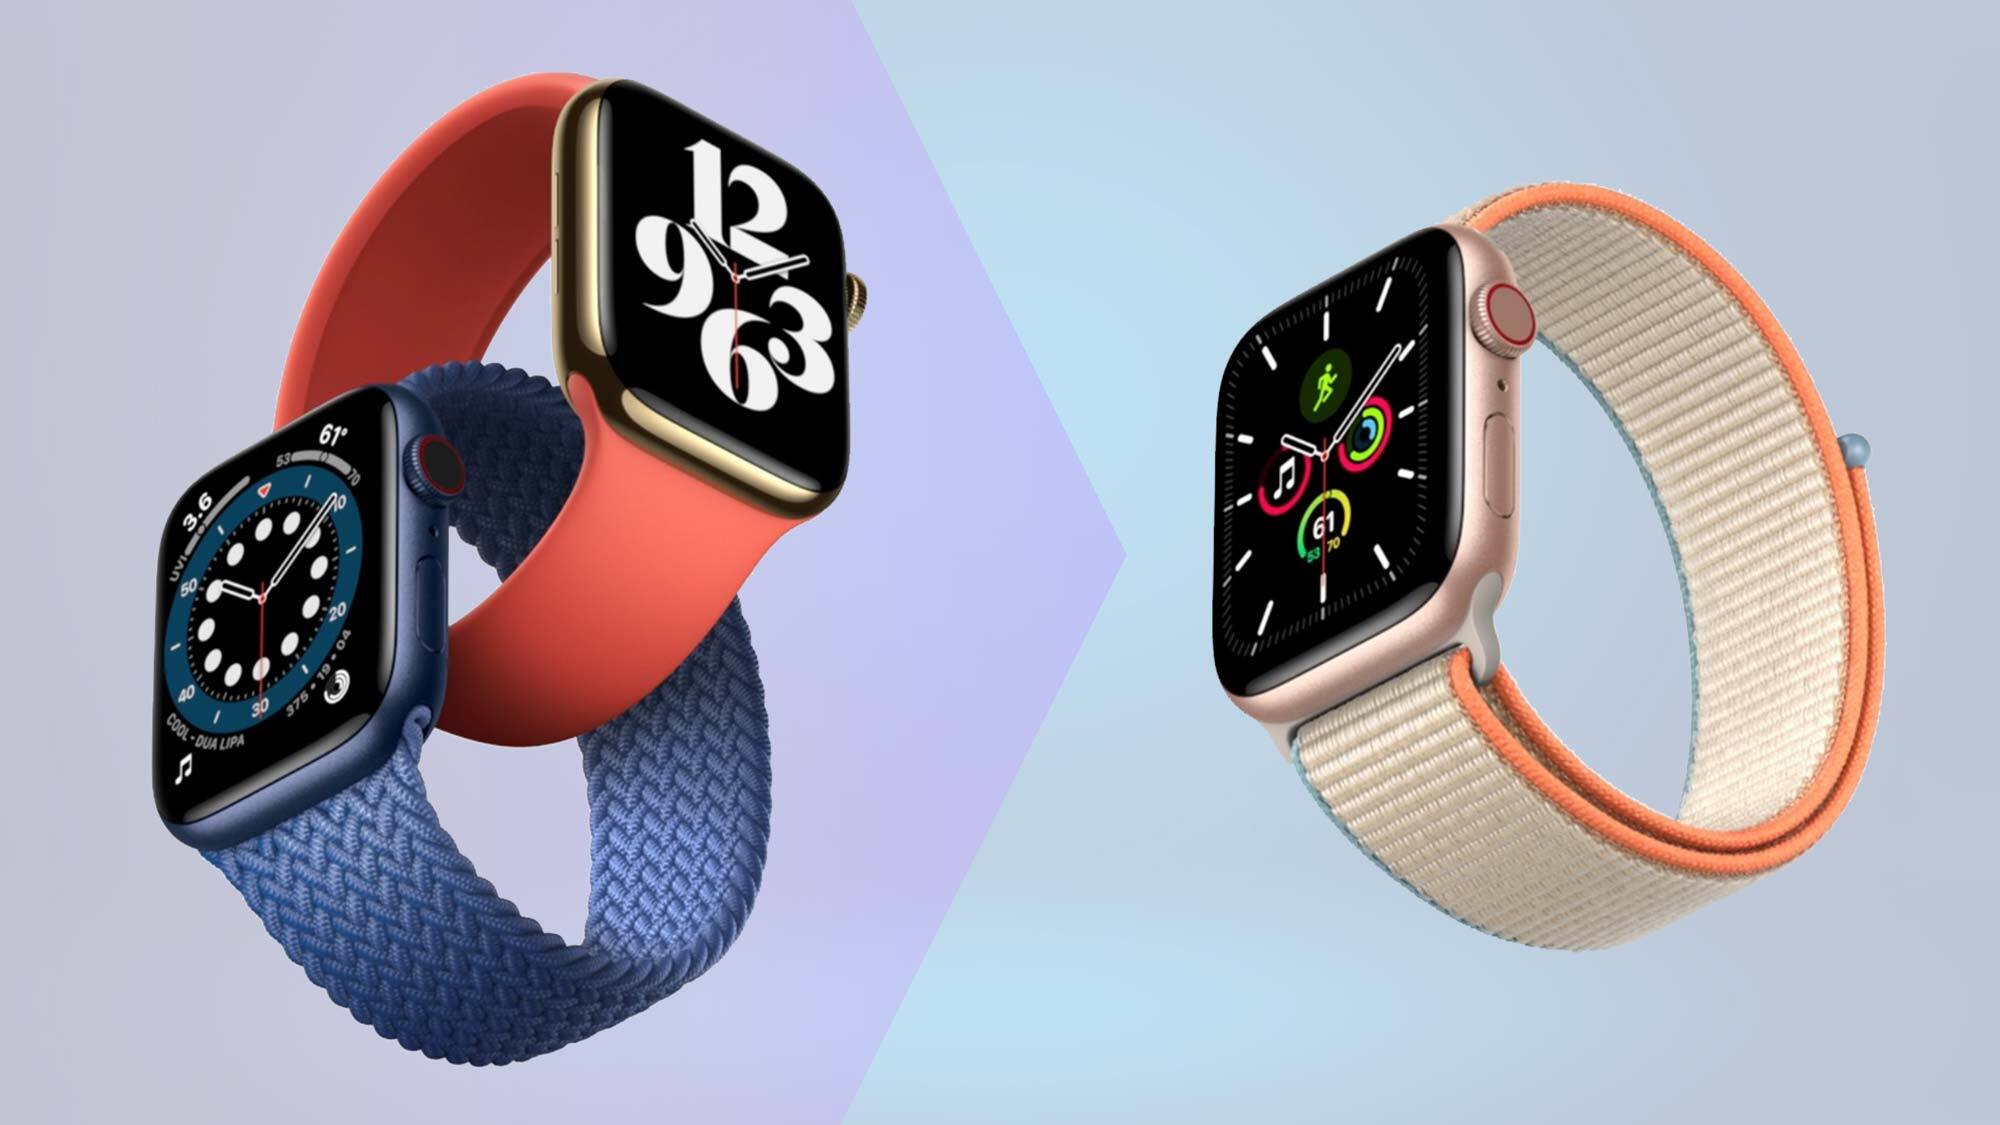 Apple Watch SE vs. Series 6 vs. Series 3: How to choose? - CNET